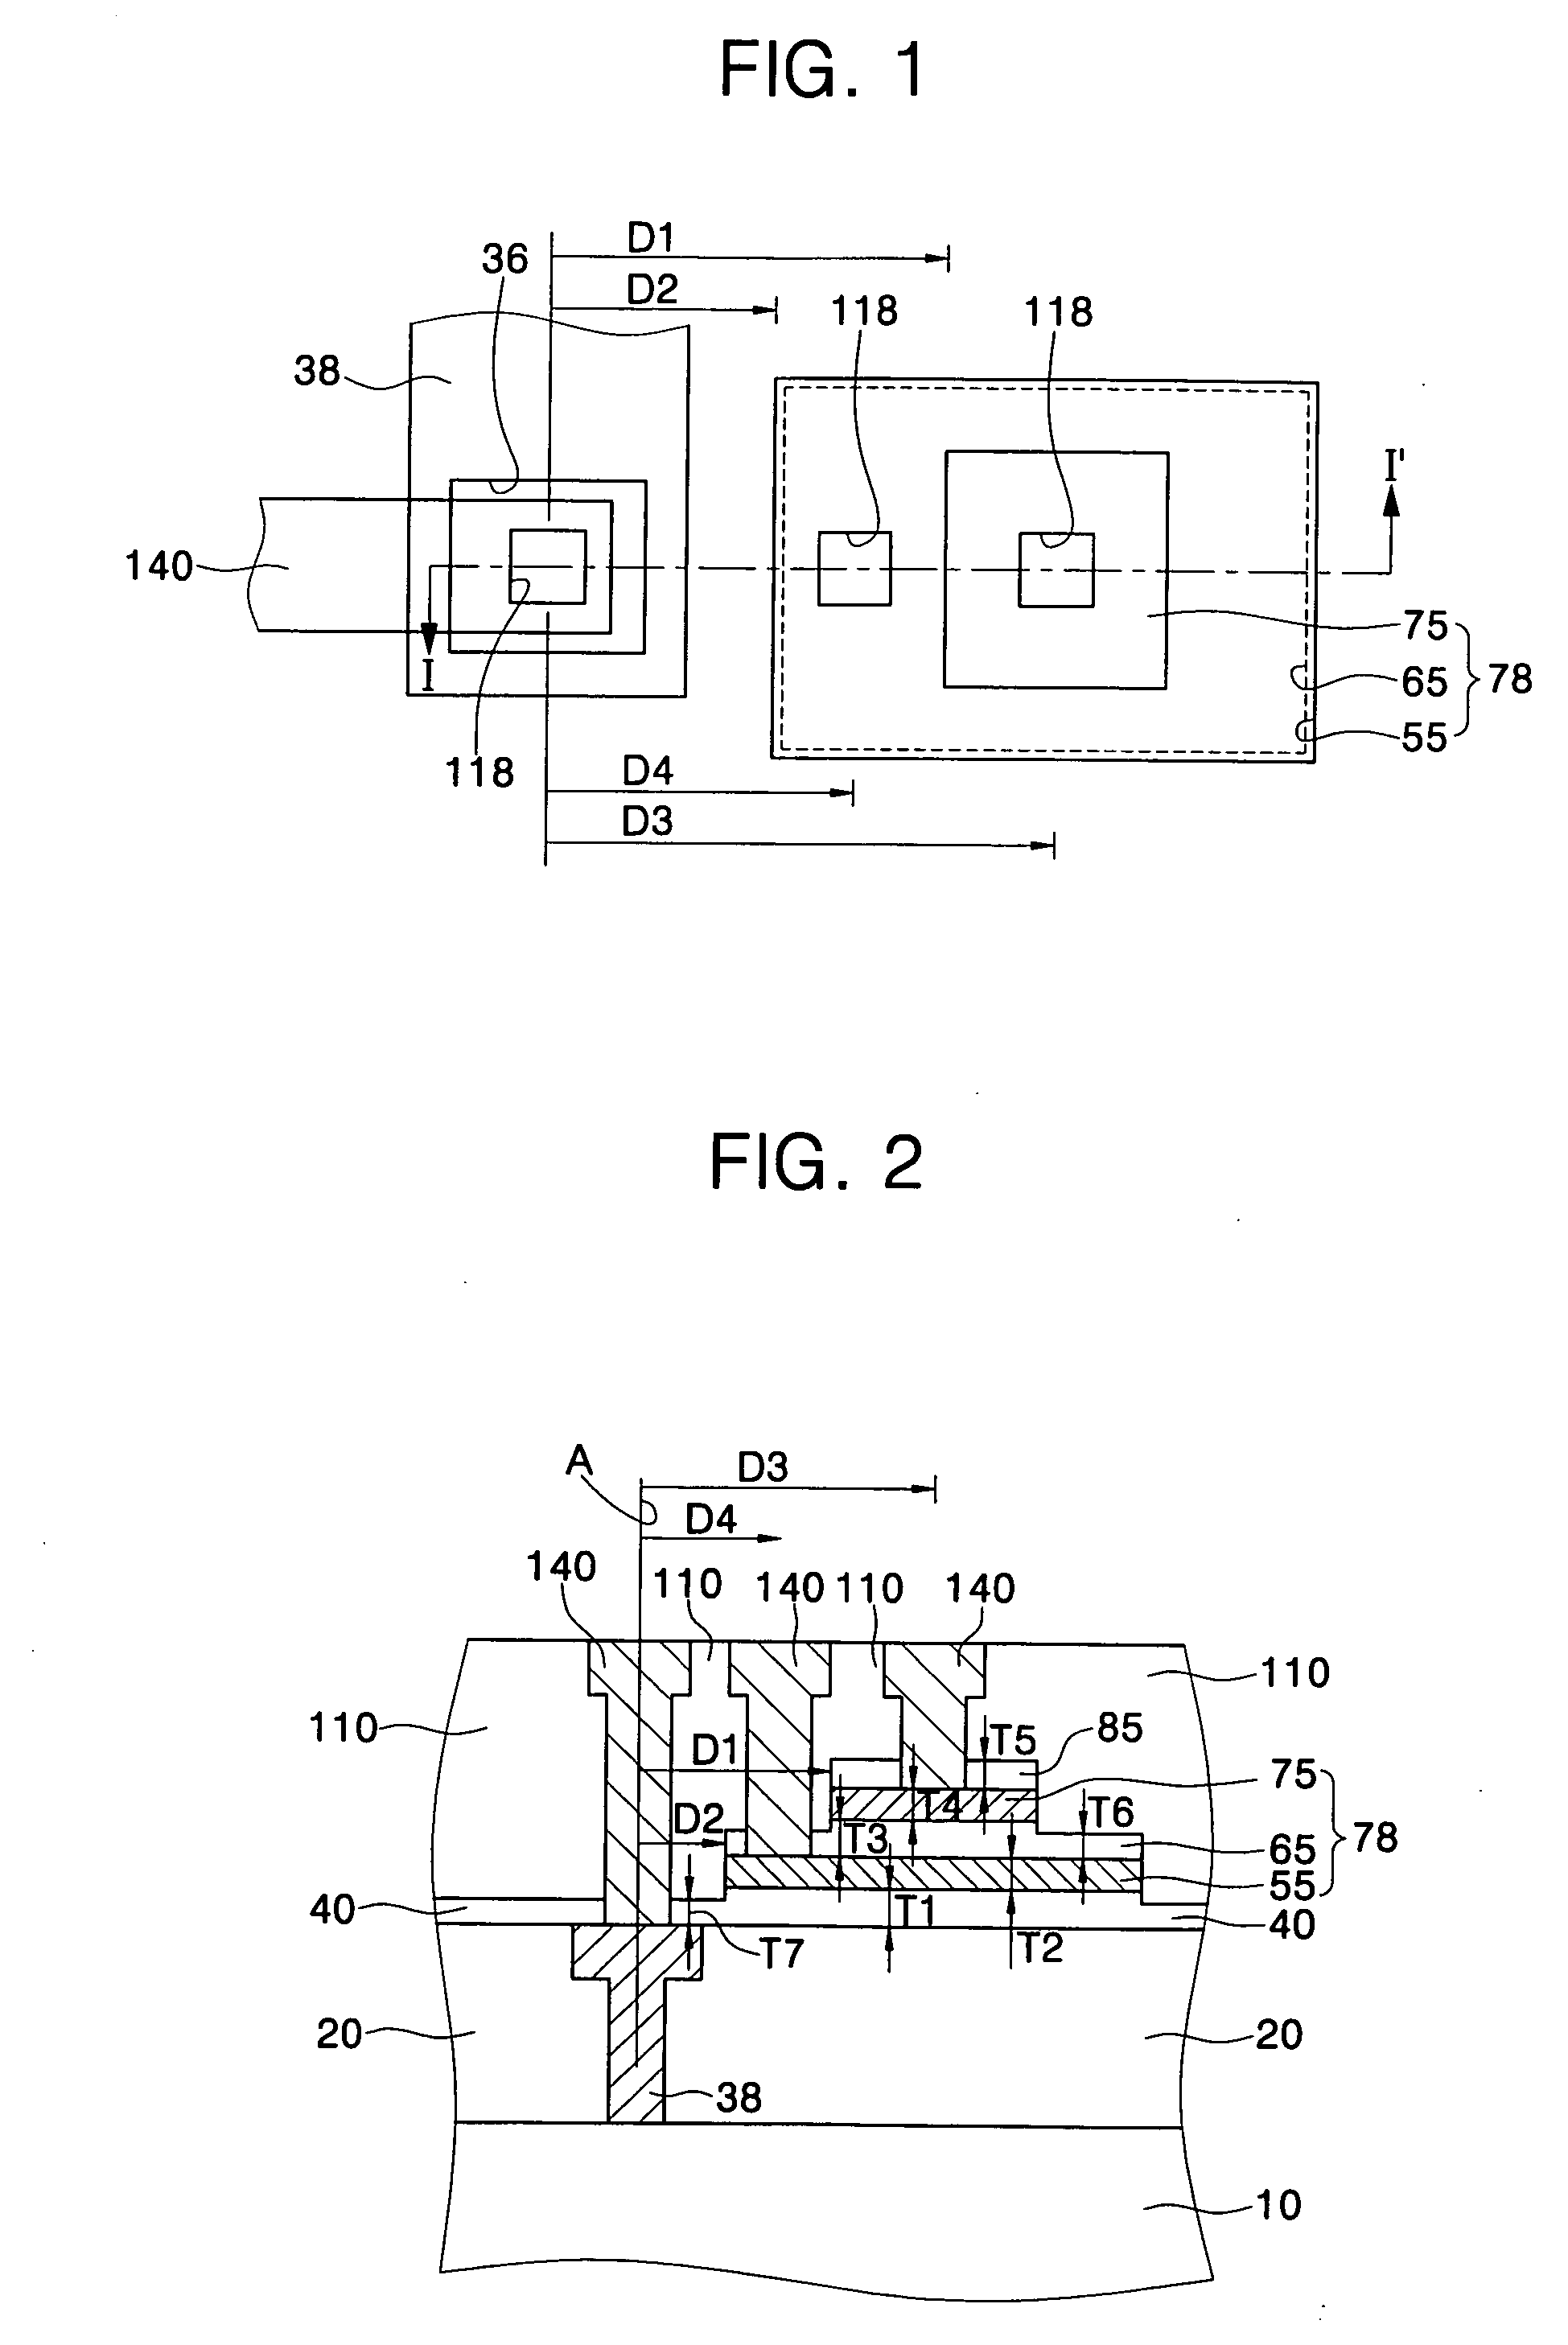 Metal-insulator-metal capacitors and methods of forming the same